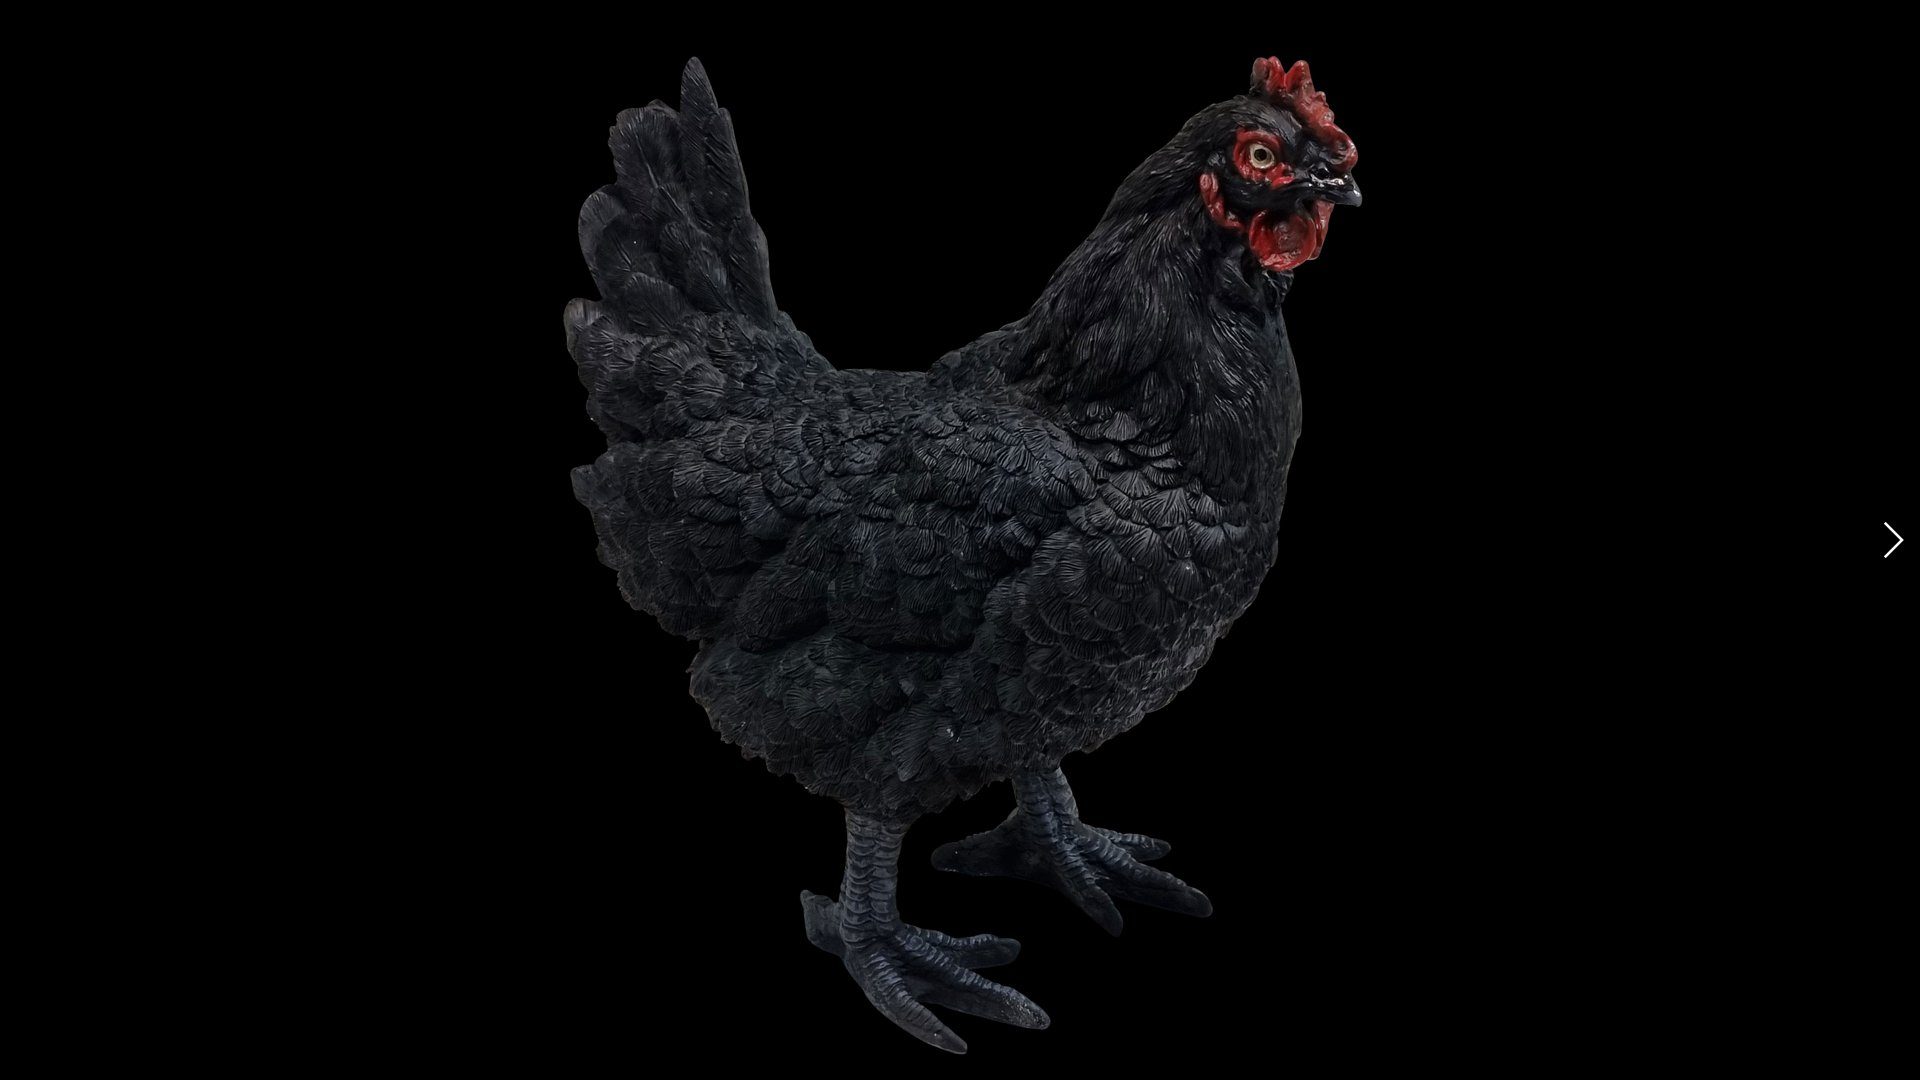 Tierfigur aus Huhn (1 Henne Gisela, Gartenfigur St), Fachhandel Plus lebensechte Dekofigur Polyresin